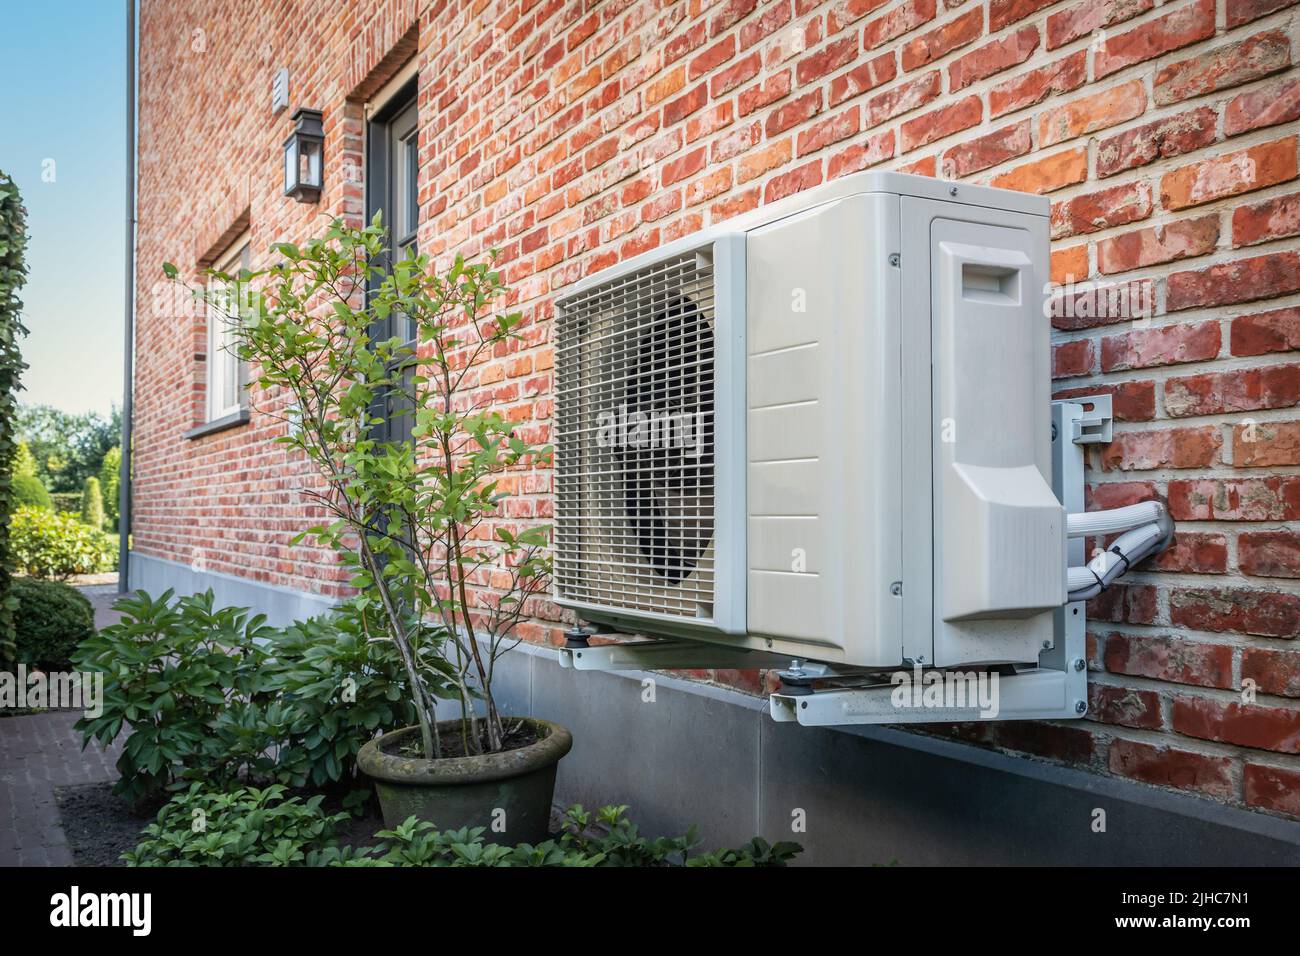 Bomba de calor aire a aire para enfriar o calentar la casa. Unidad exterior alimentada por energía renovable. Foto de stock